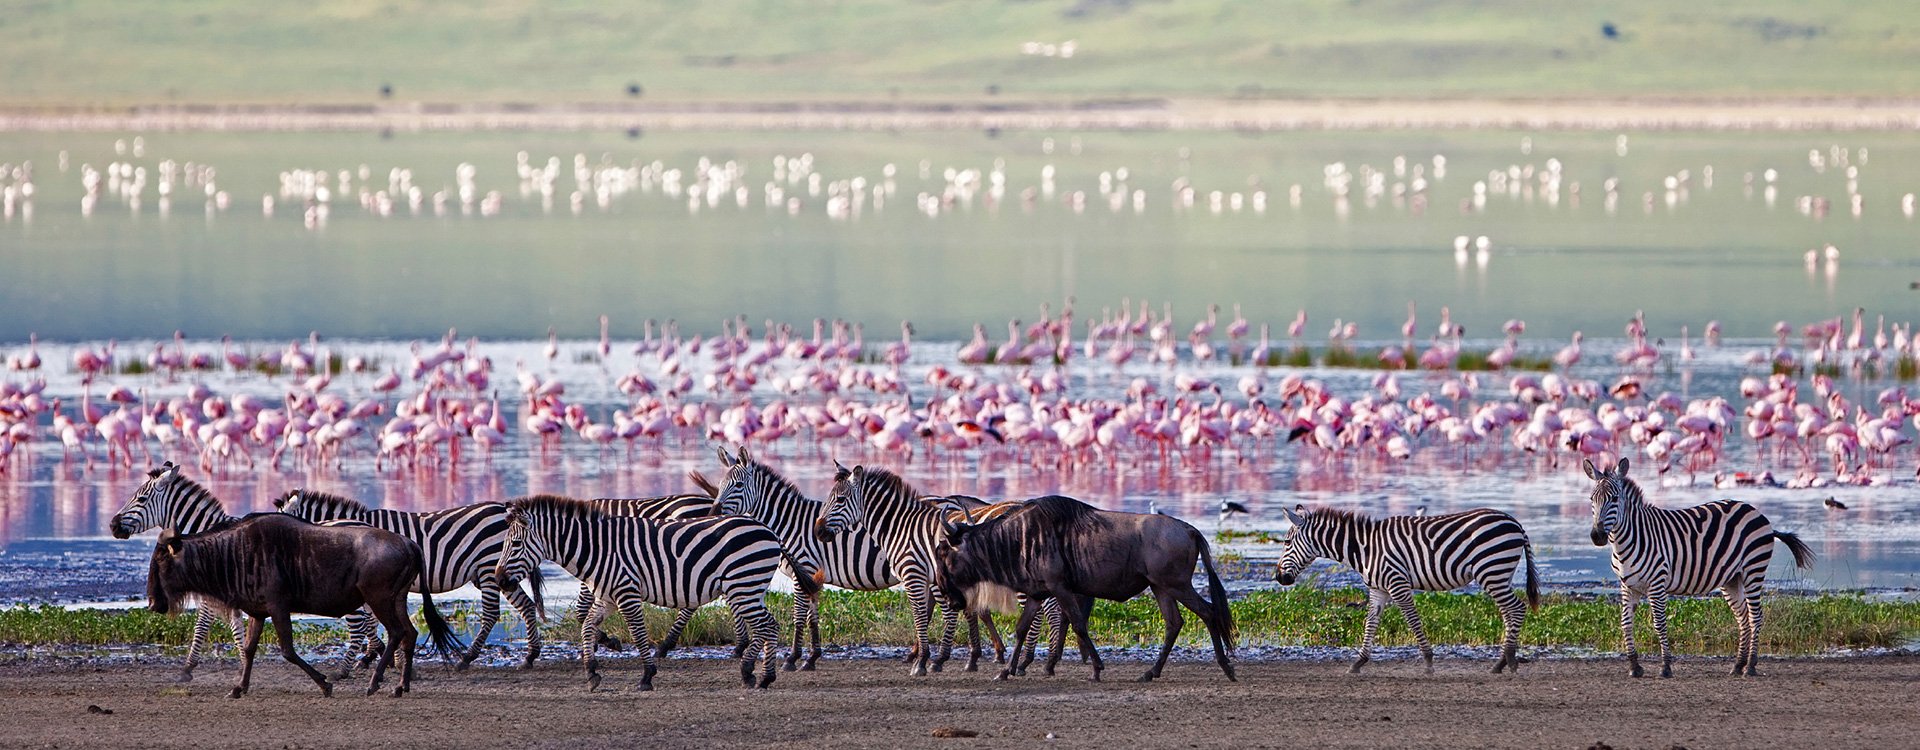 Tanzania_Lake Manyara